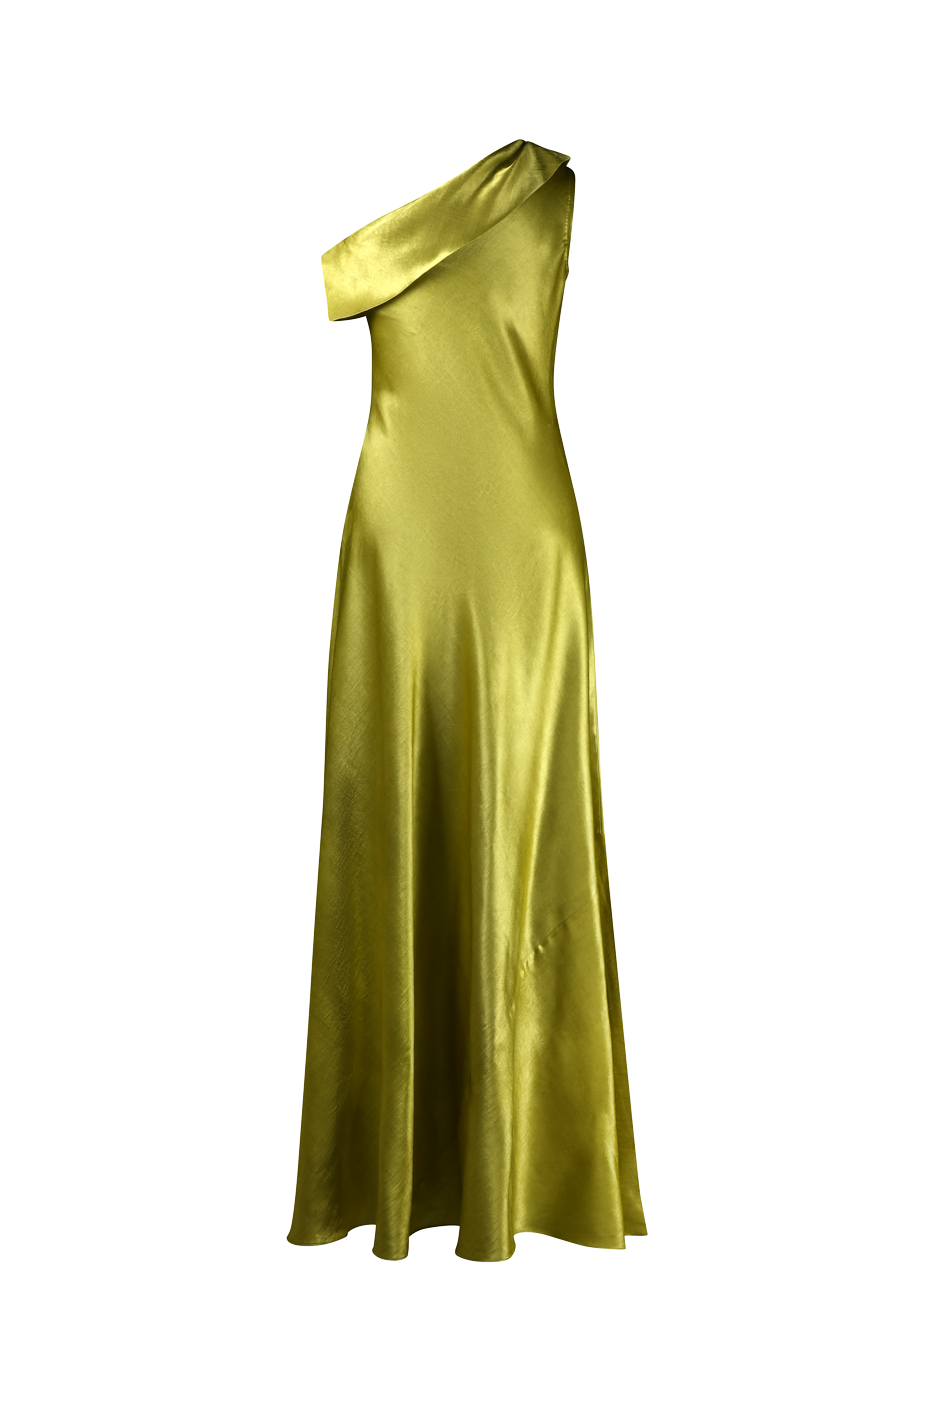 Lemon Luxe Dress